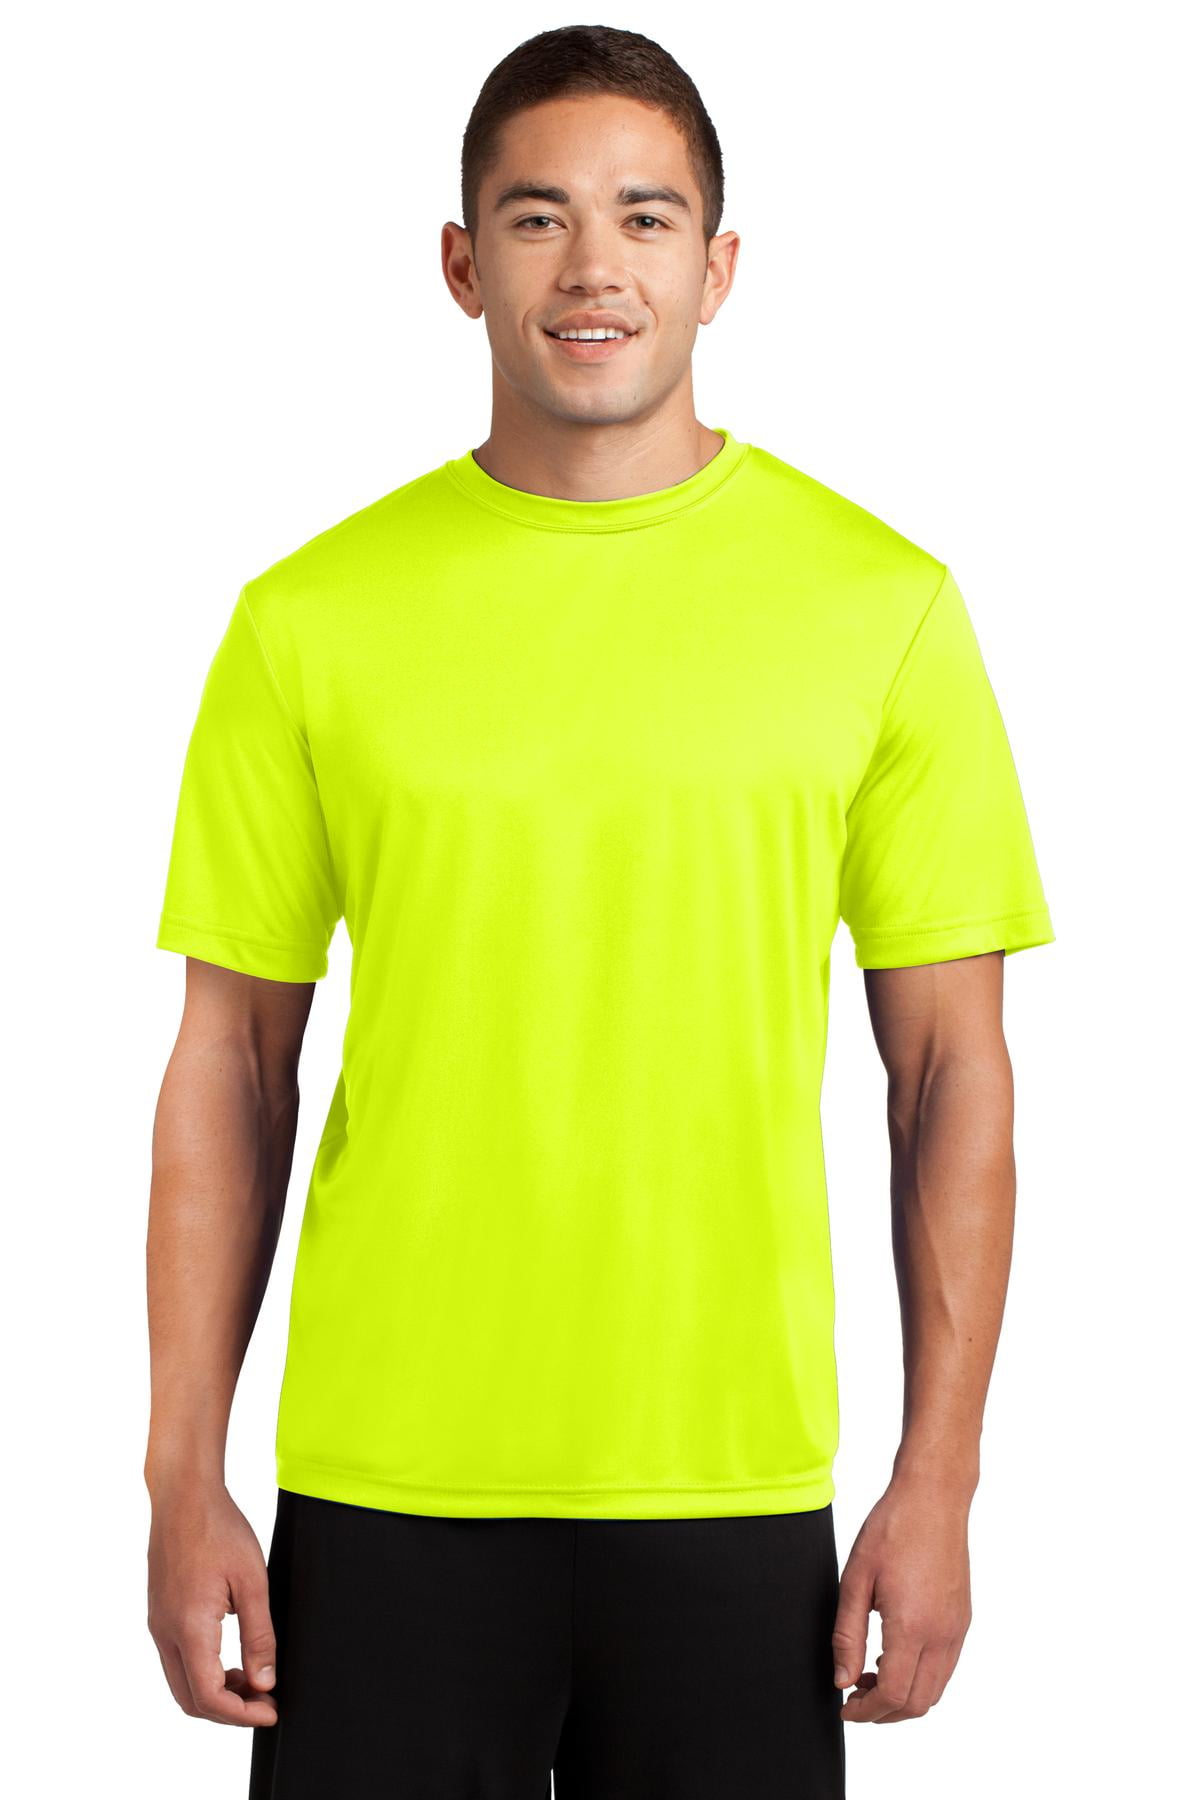 Tek Gear 100% Polyester Color Block Teal Active T-Shirt Size 3X (Plus) -  44% off